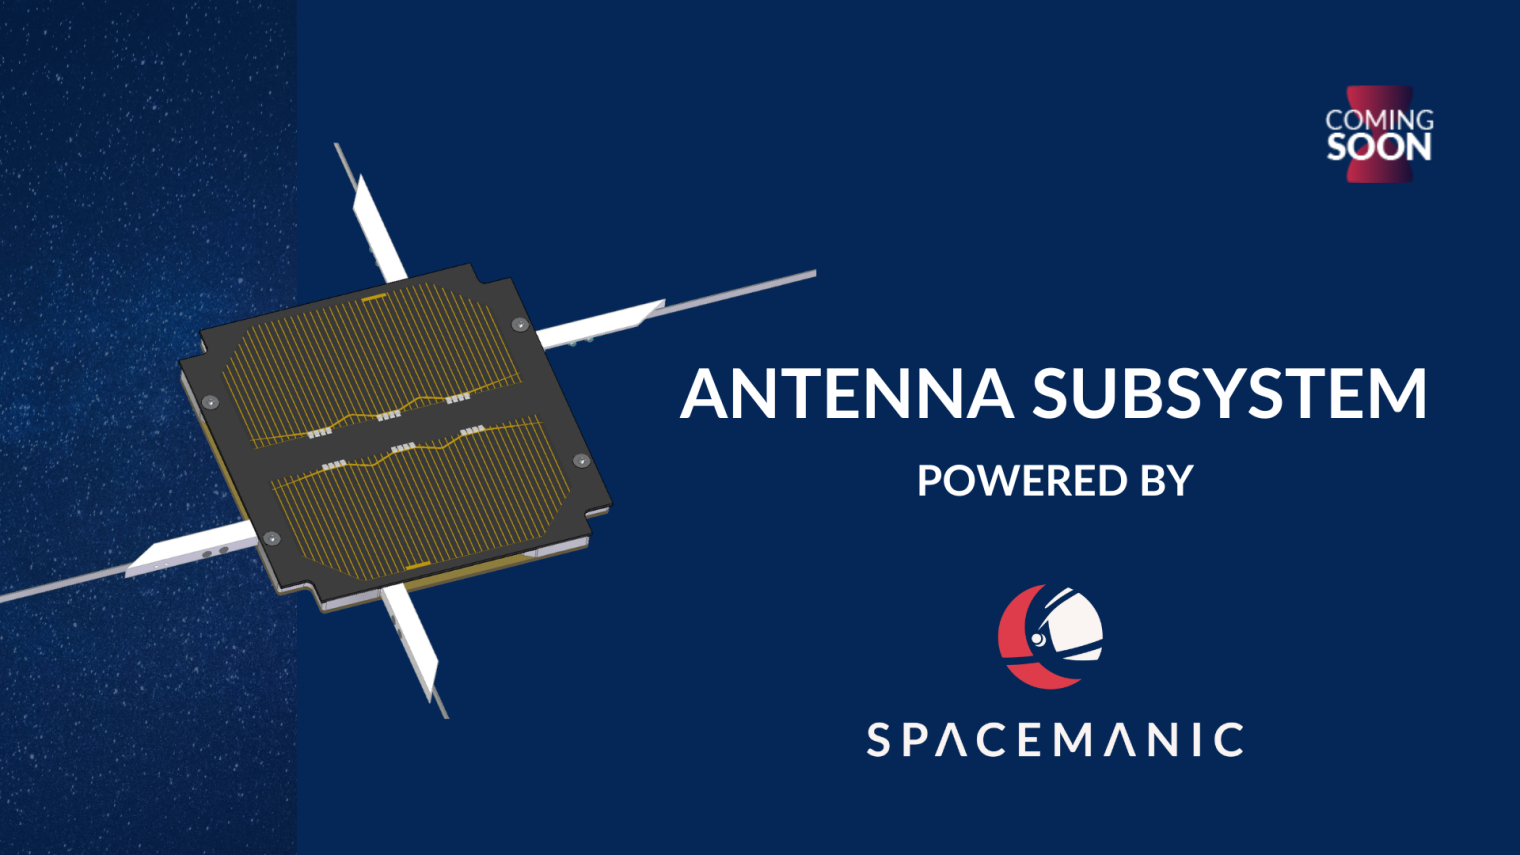 Coming soon: Nanosatellite Antenna subsystem